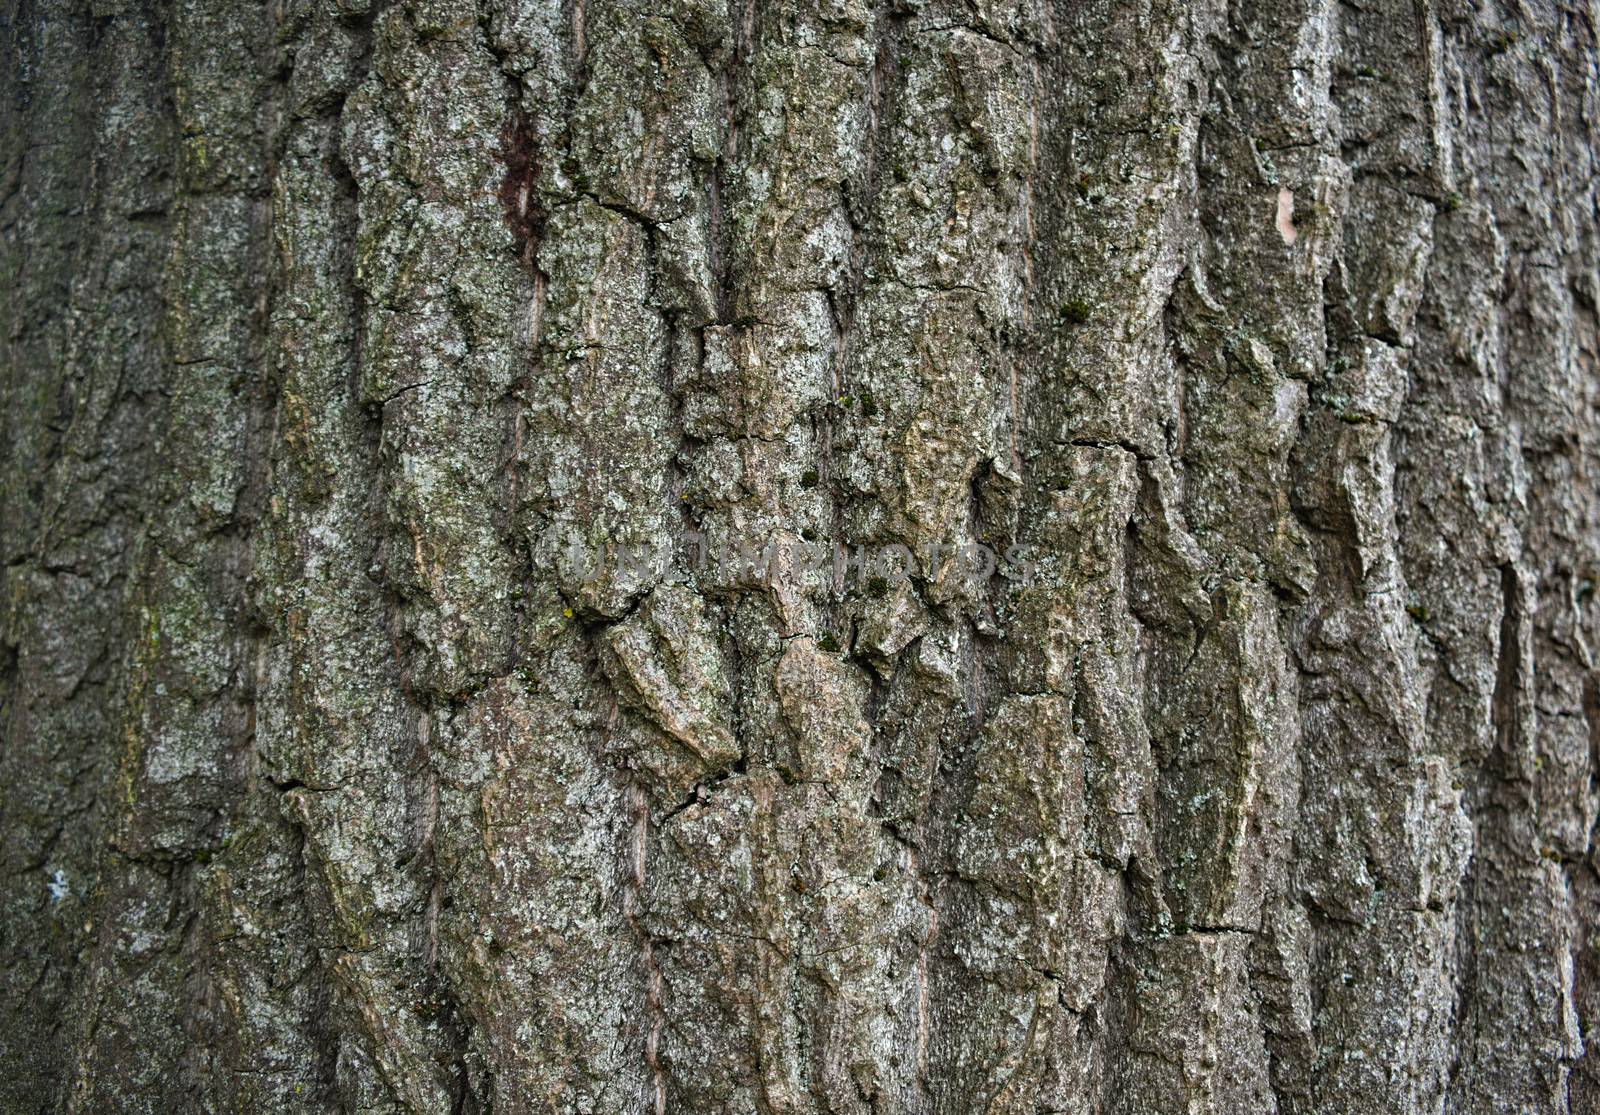 Big tree bark, close up view by sheriffkule